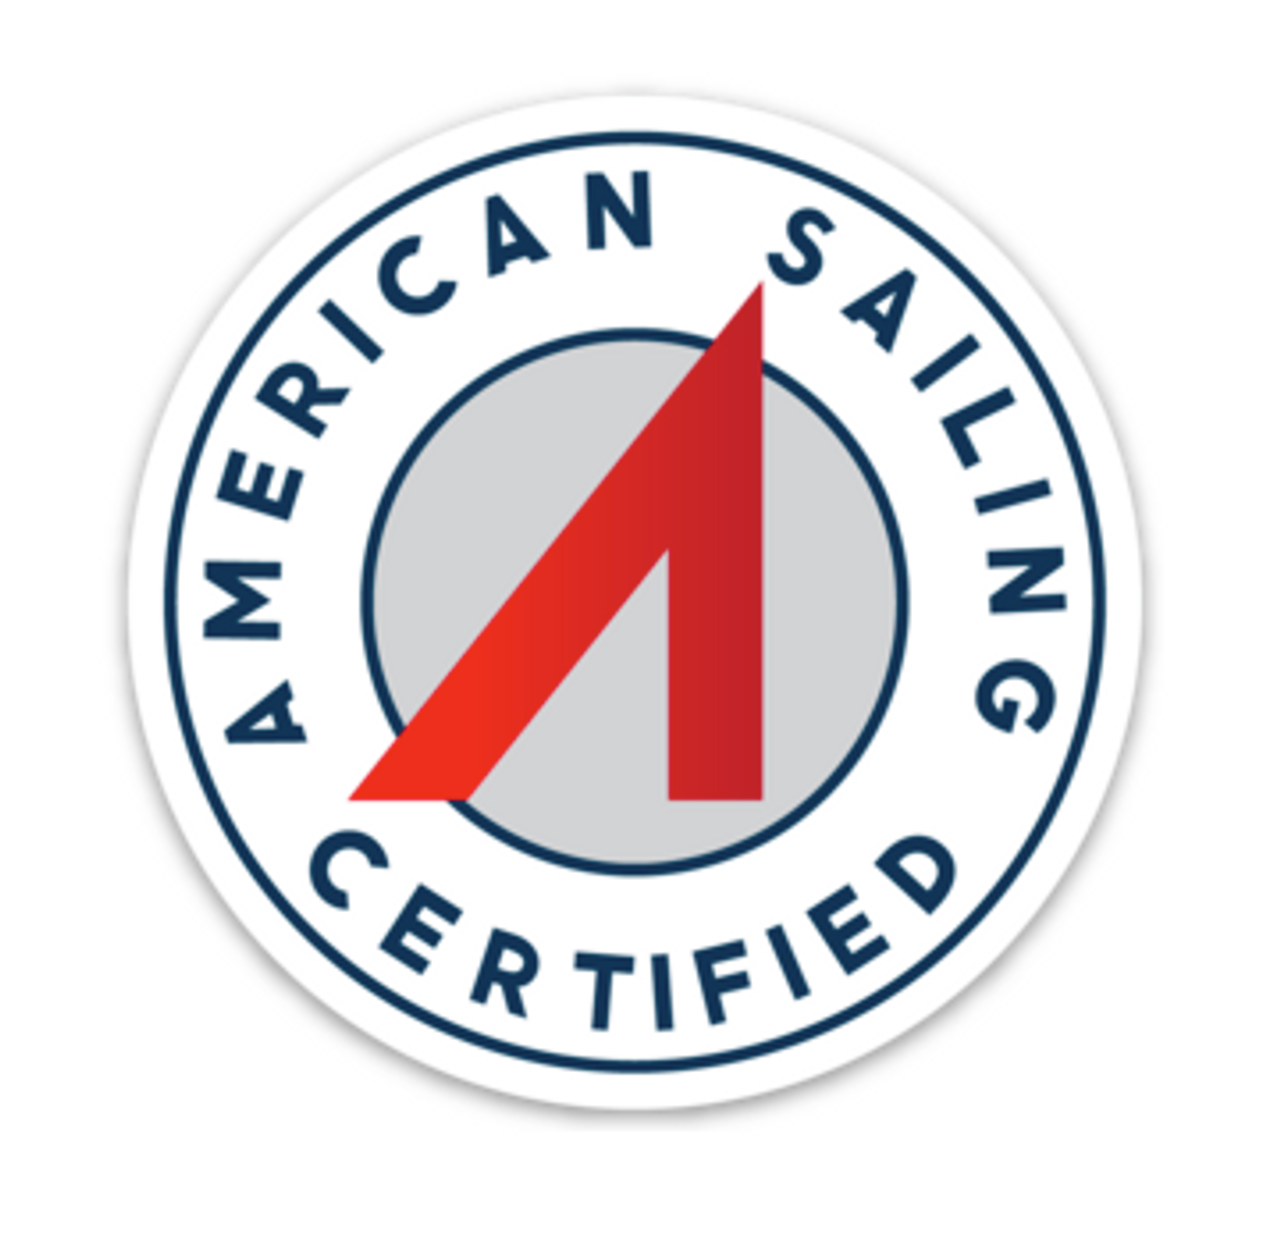 American Sailing Certified Emblem Sticker